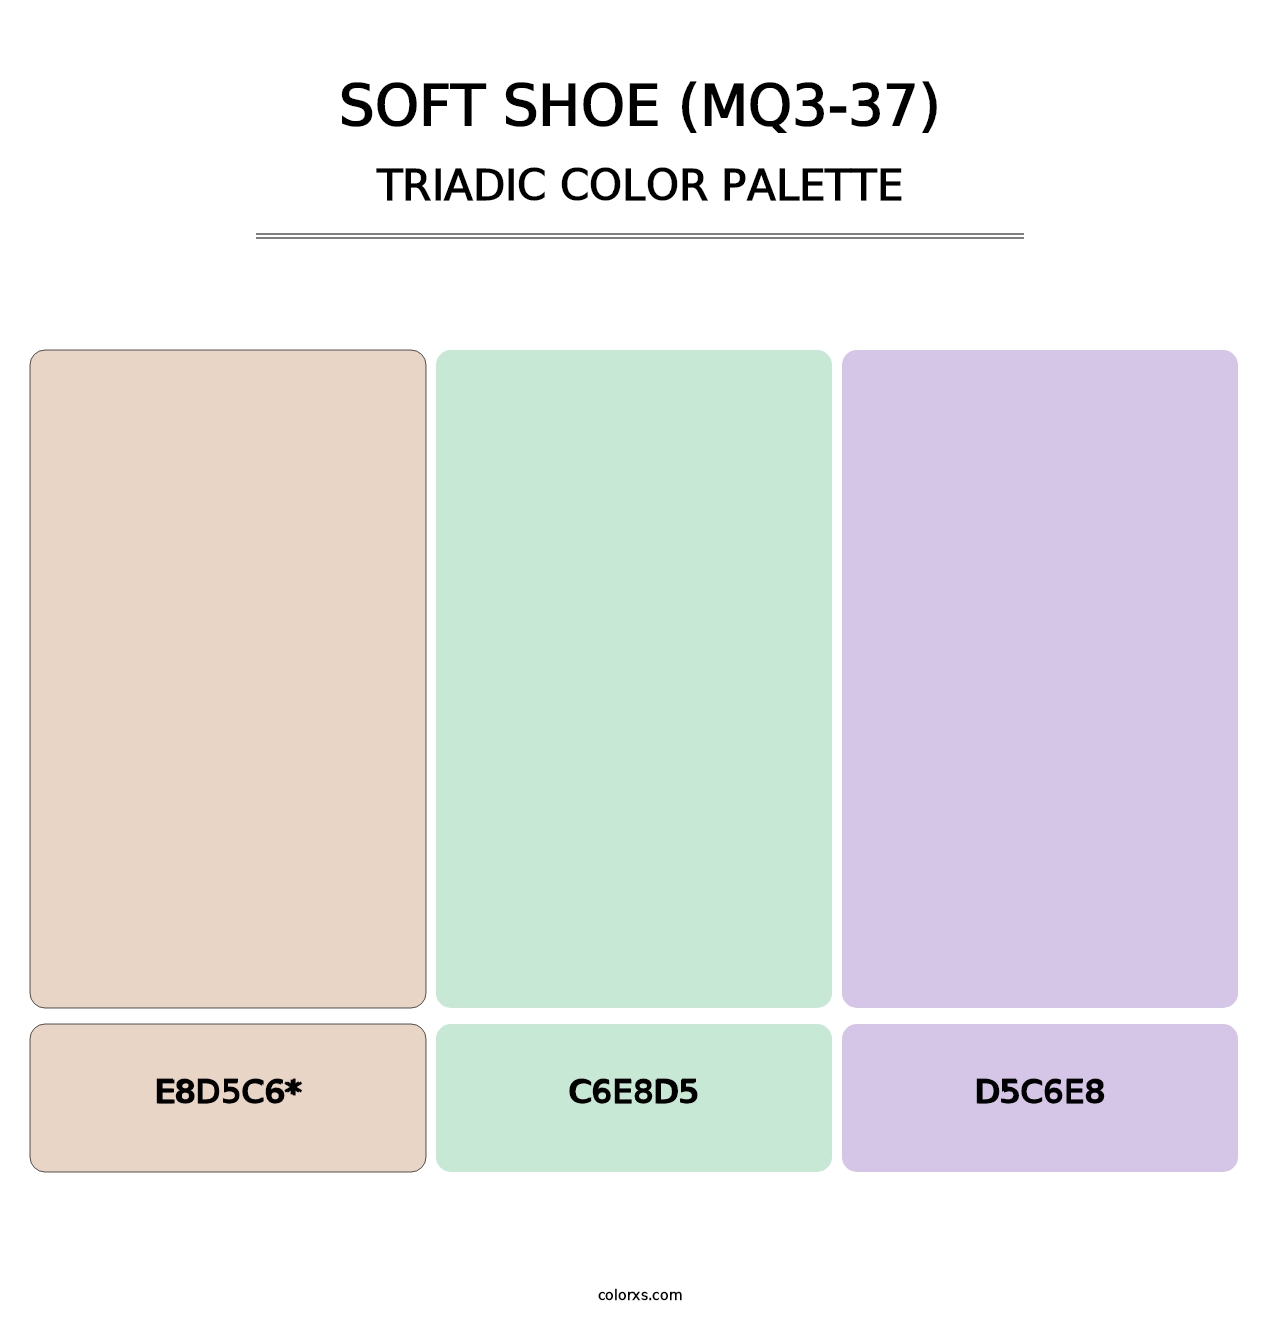 Soft Shoe (MQ3-37) - Triadic Color Palette